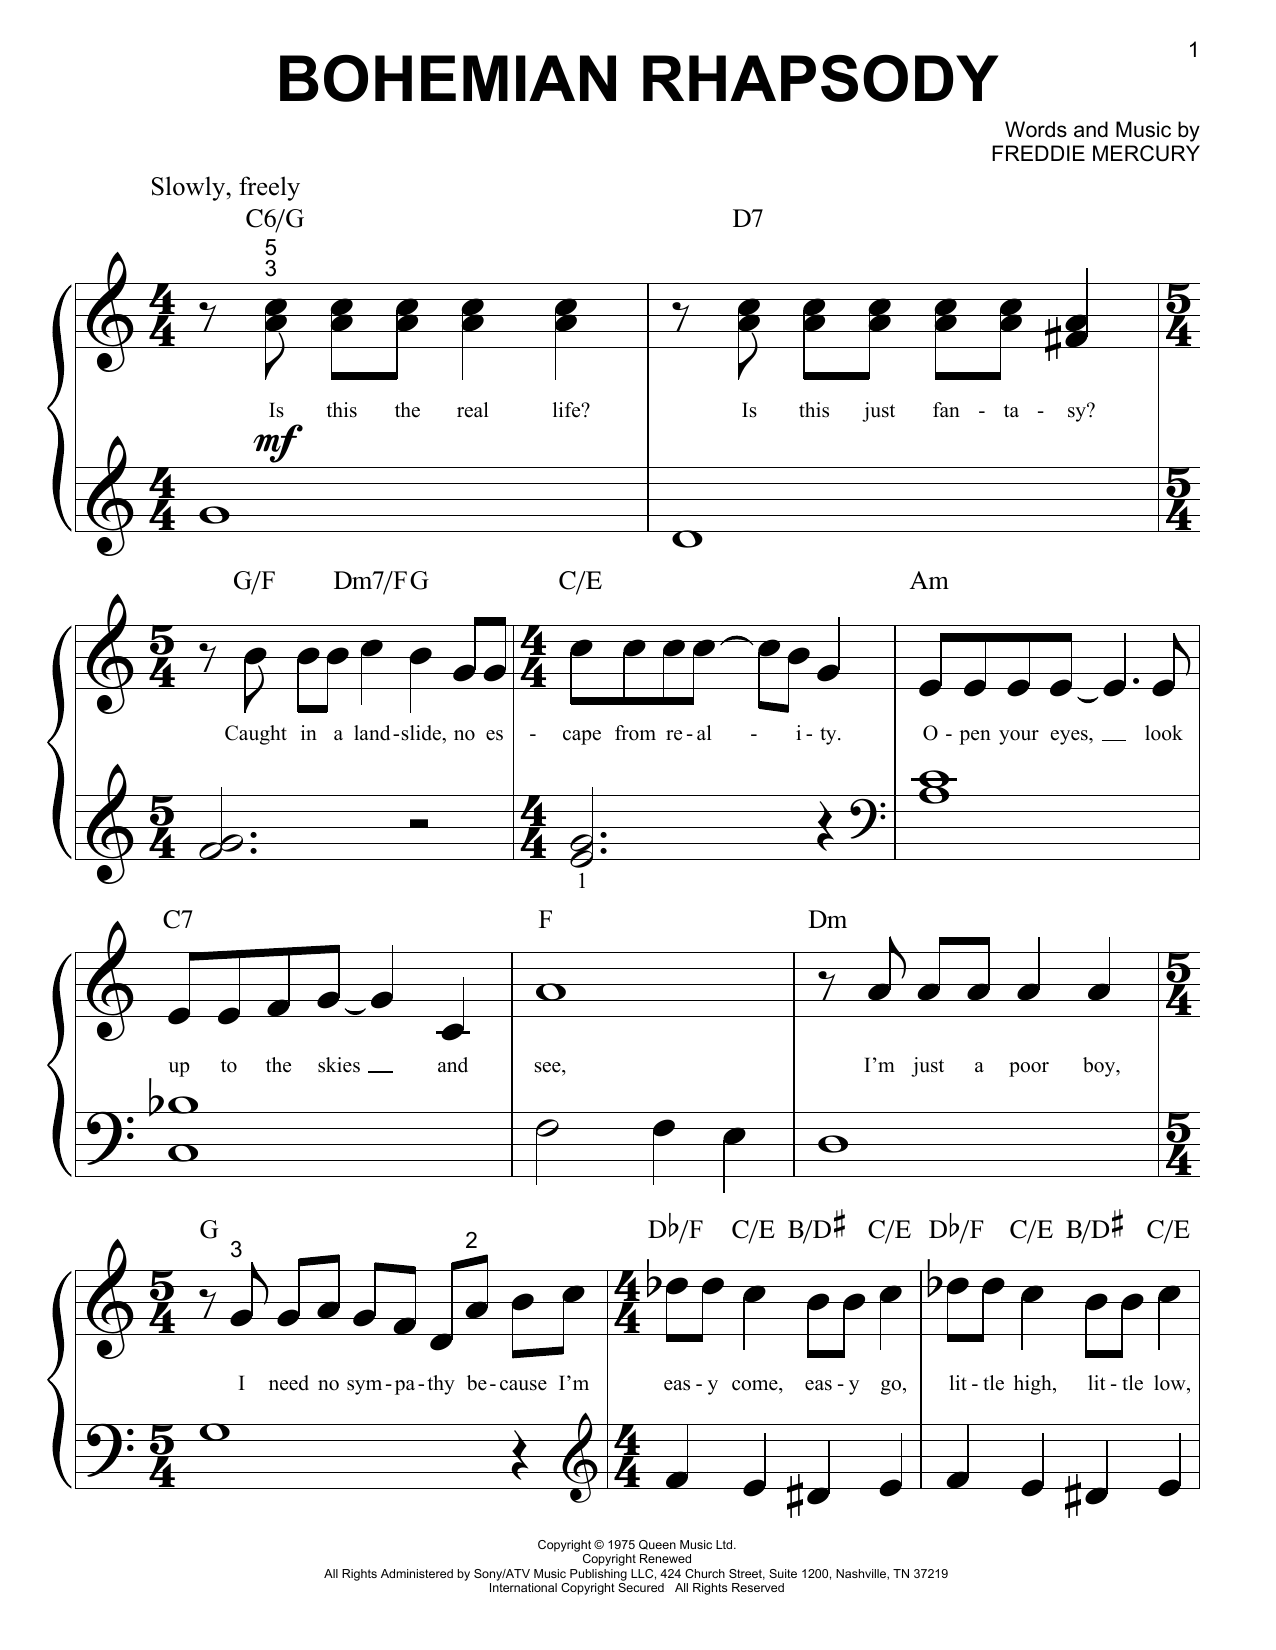 Bohemian rhapsody notes for piano pdf torrent